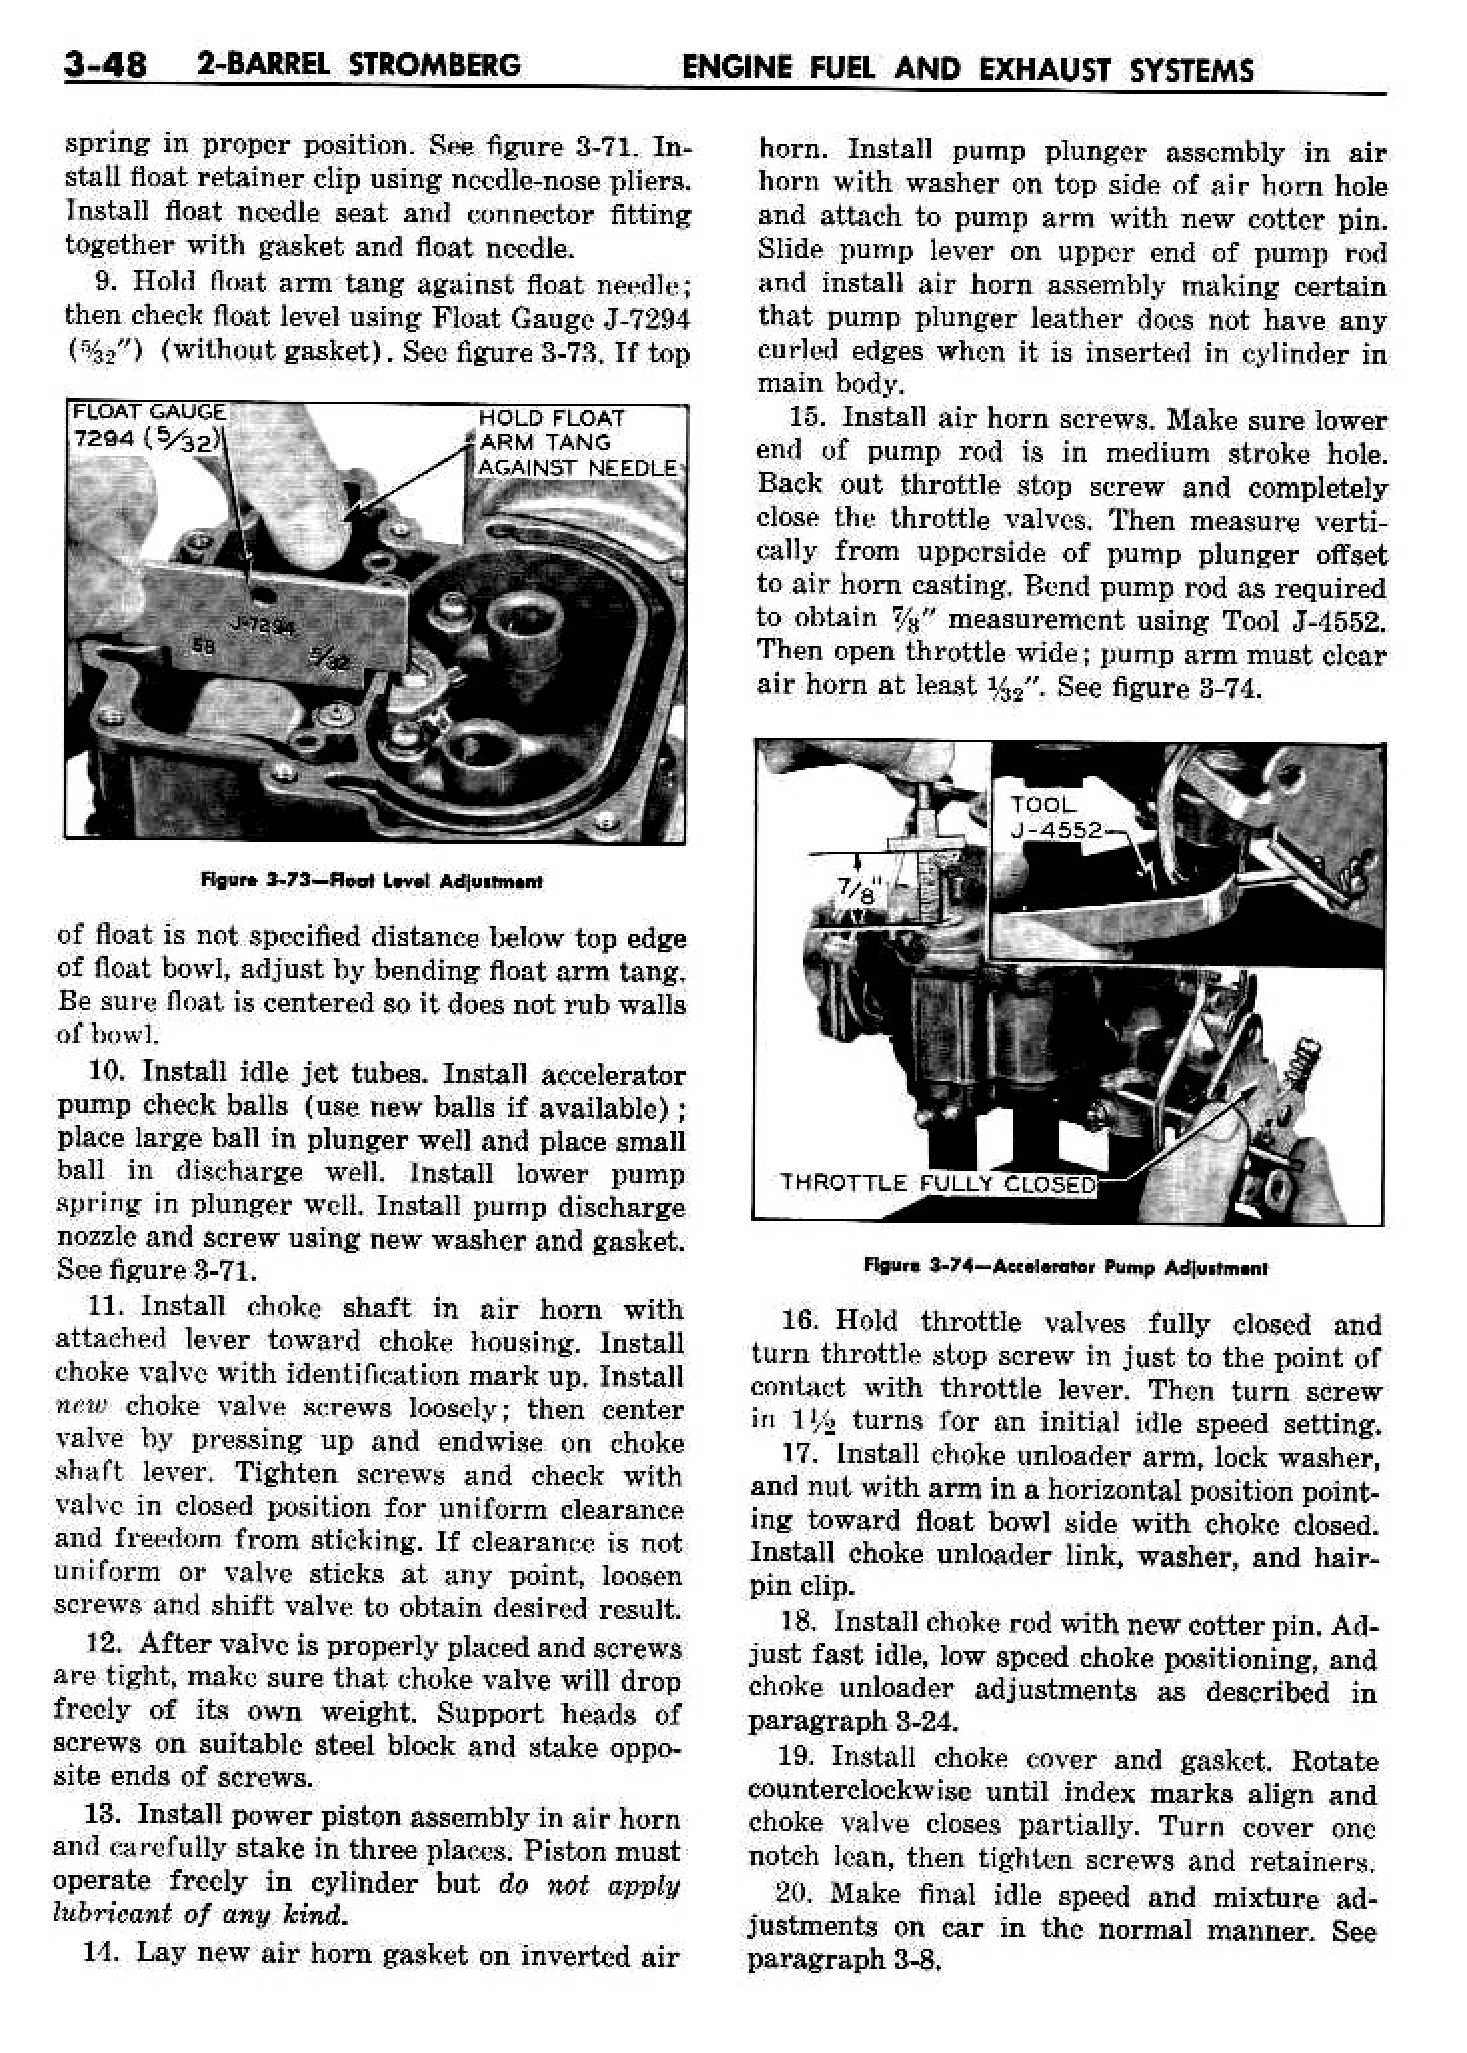 n_04 1958 Buick Shop Manual - Engine Fuel & Exhaust_48.jpg